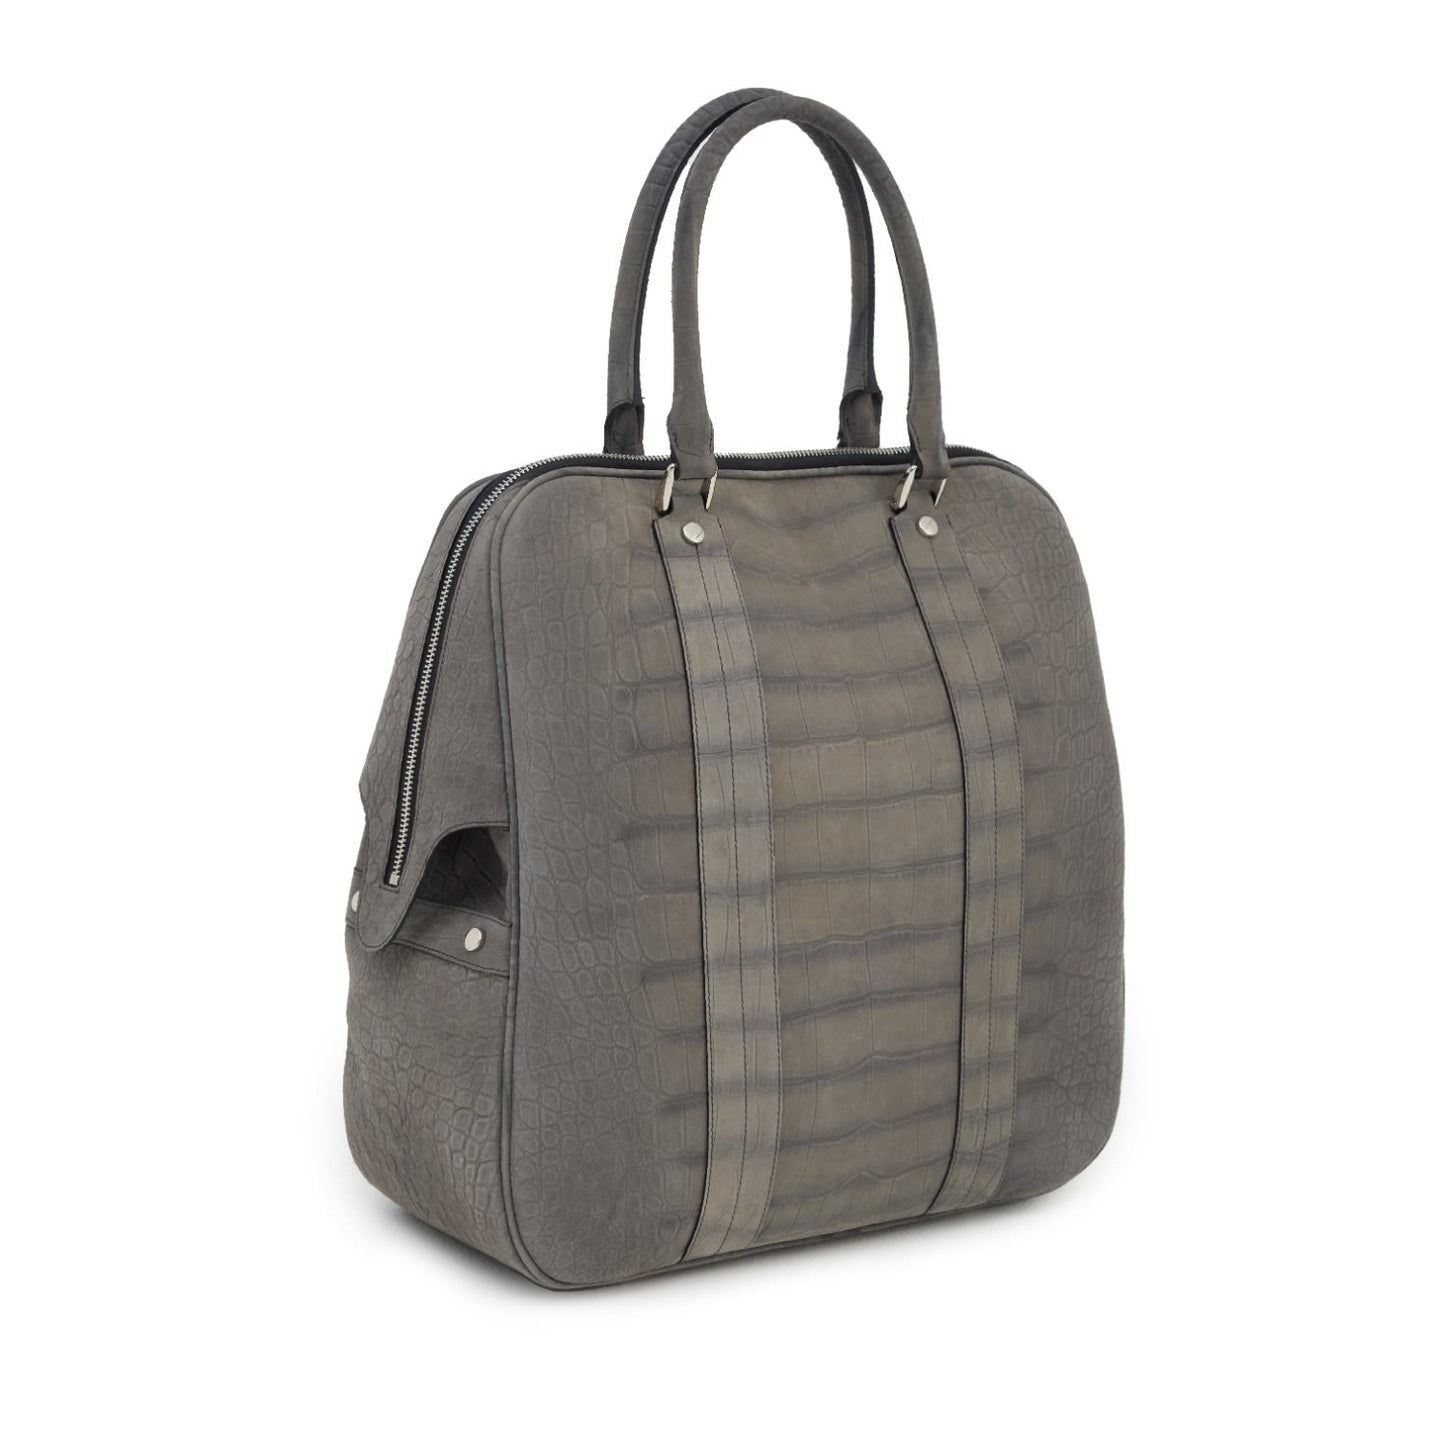 Croco Texture Leather Tote Handbag Grey Large